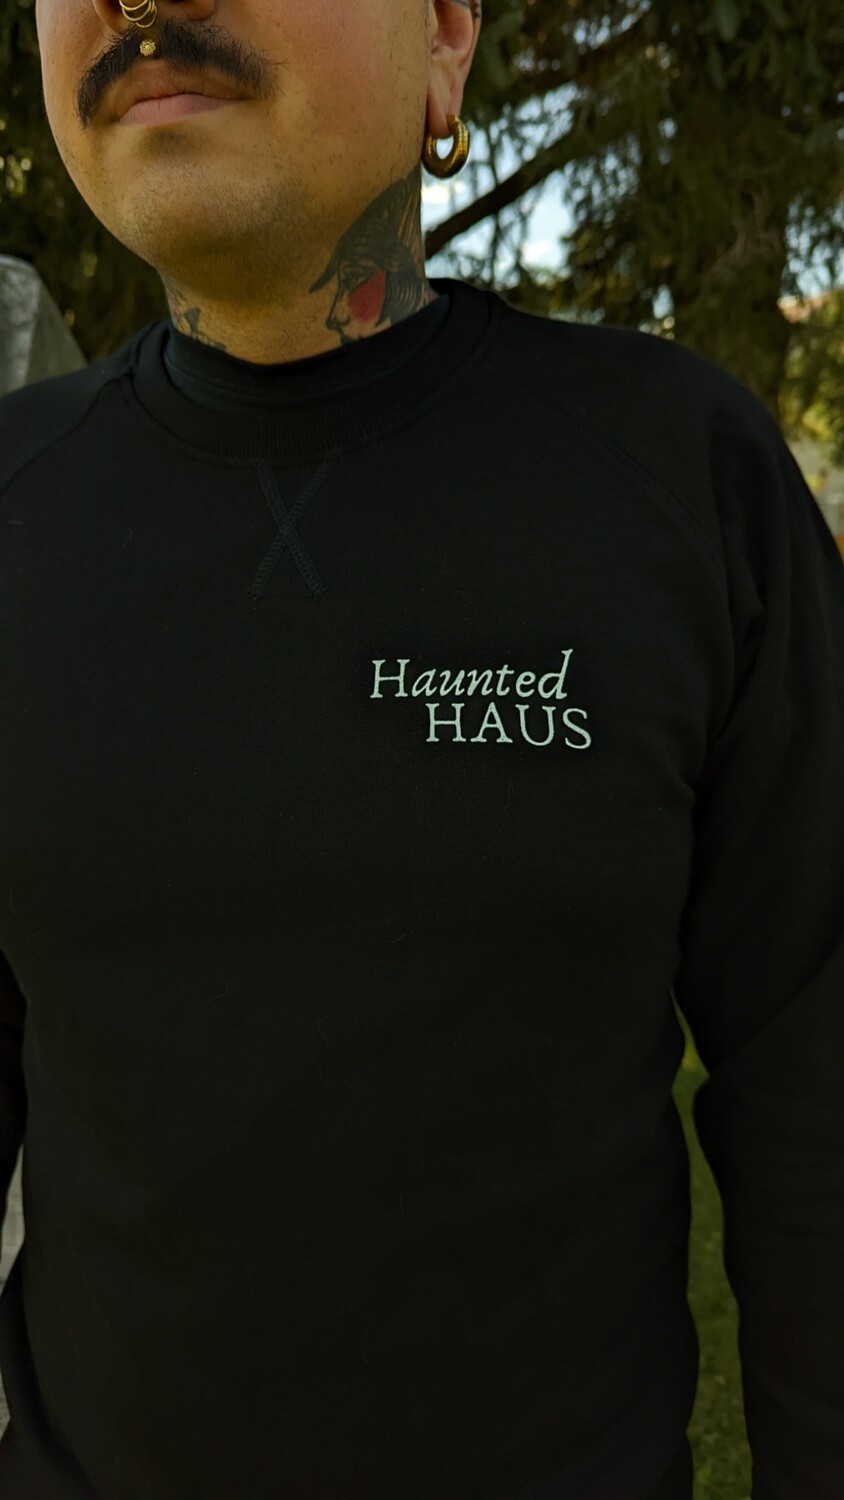 Haunted haus